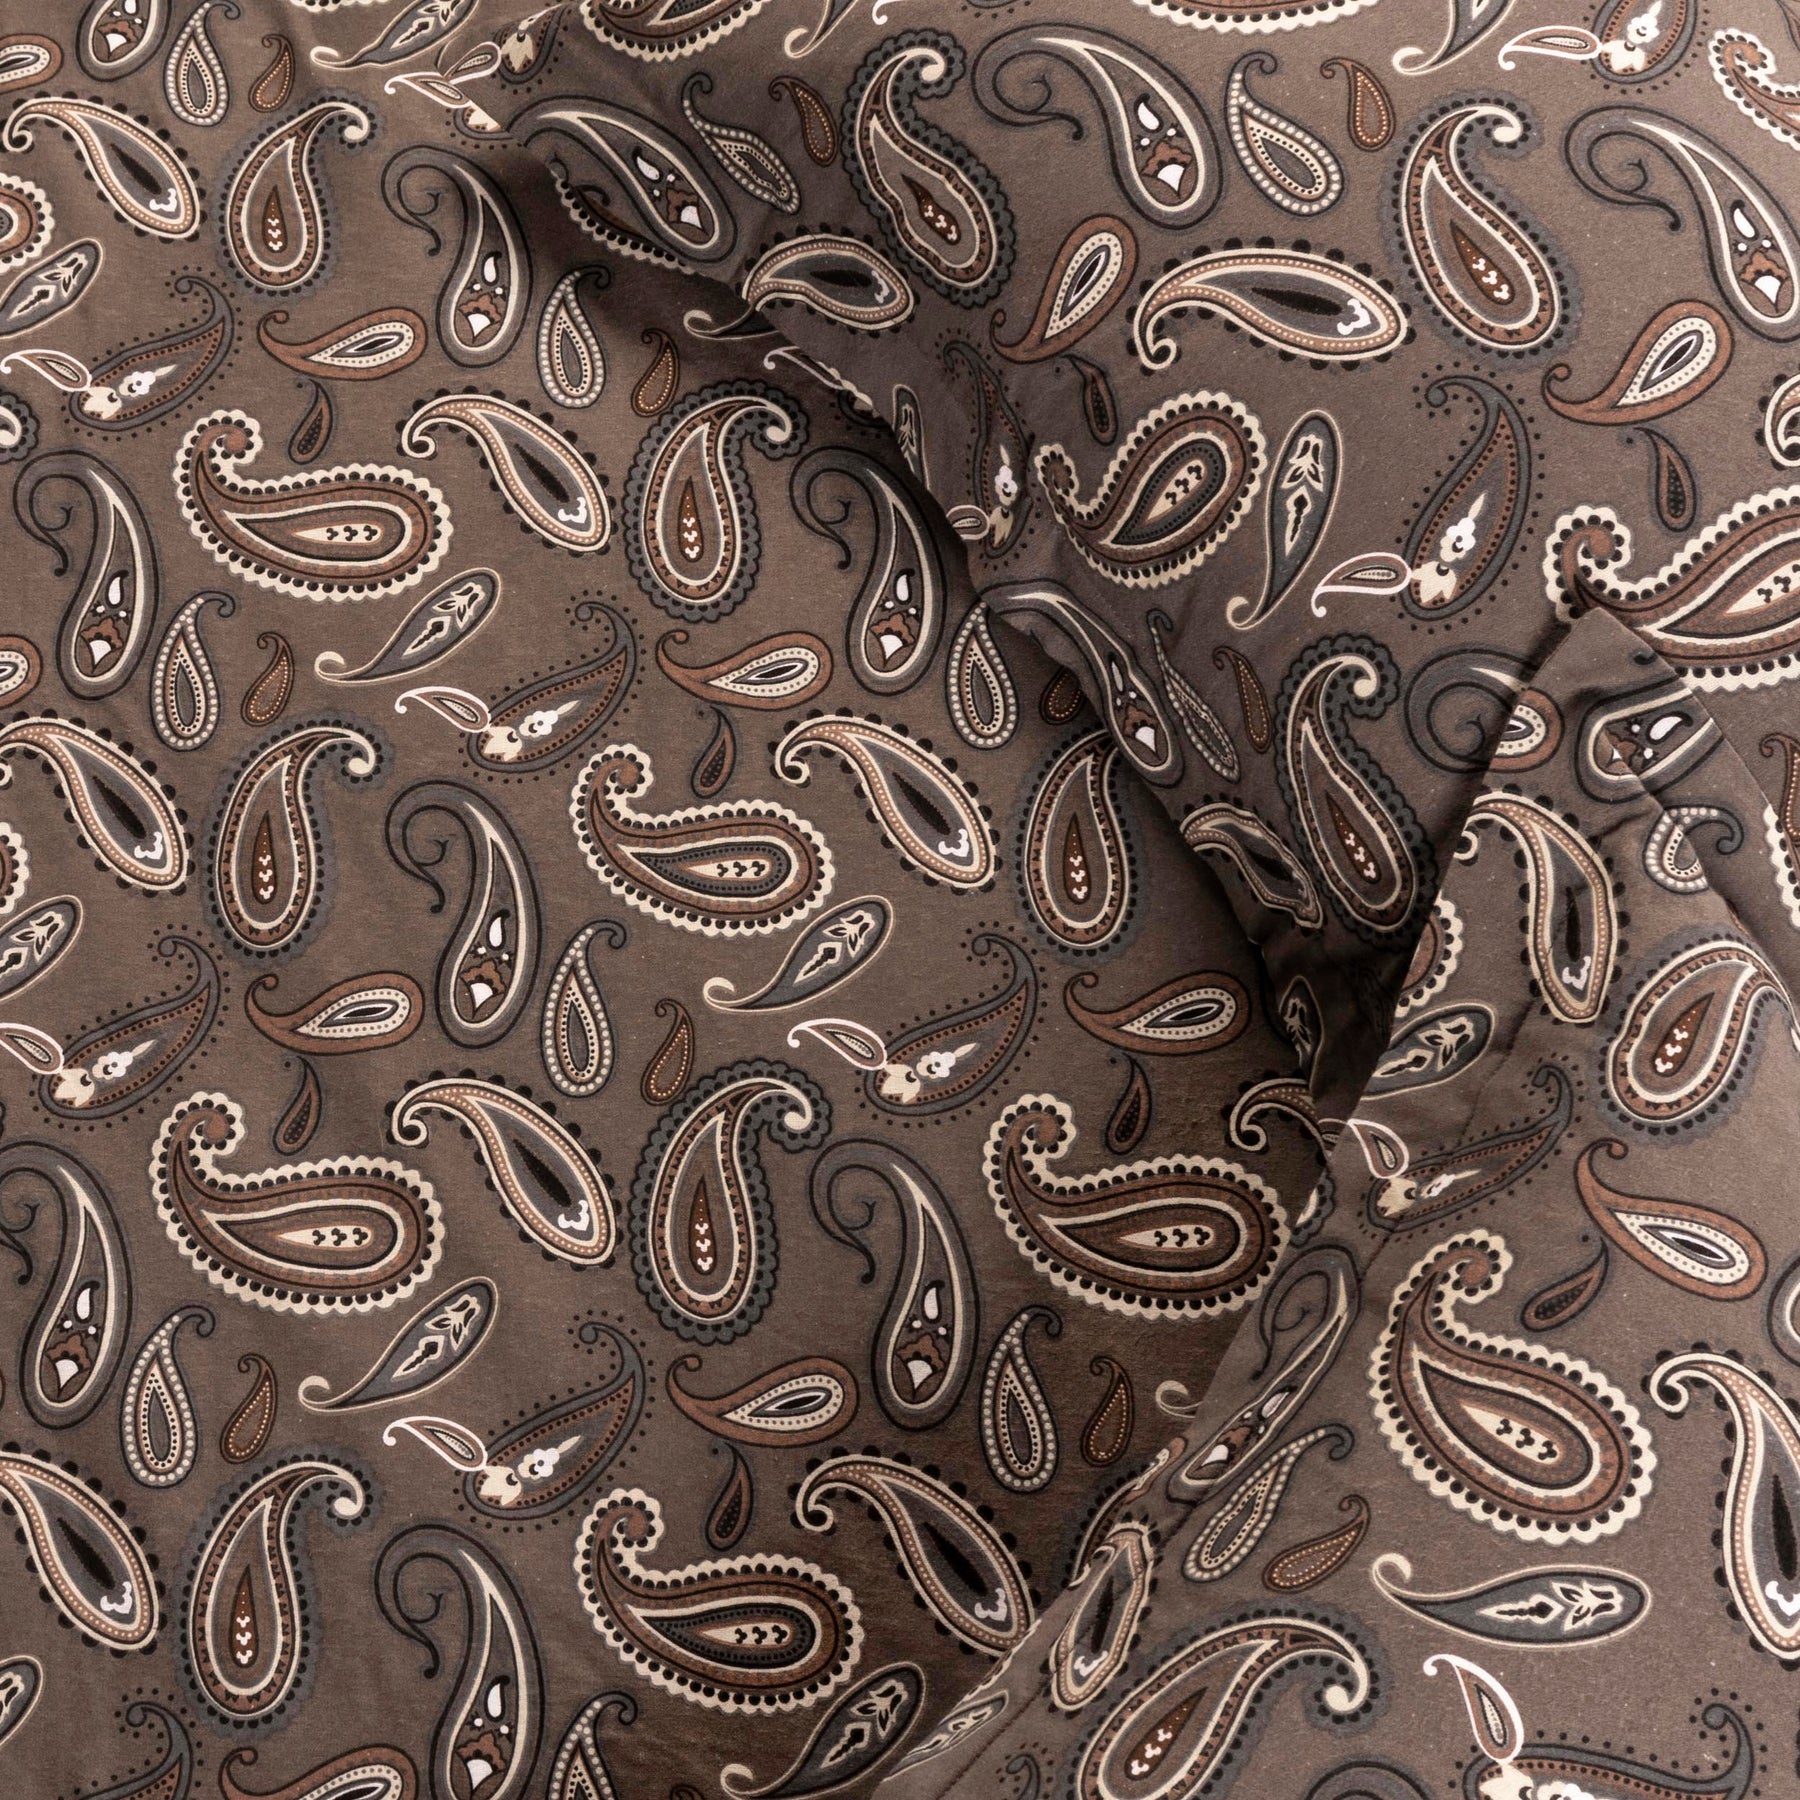 Superior Flannel Cotton Paisley Luxury Duvet Cover Set - Charcoal